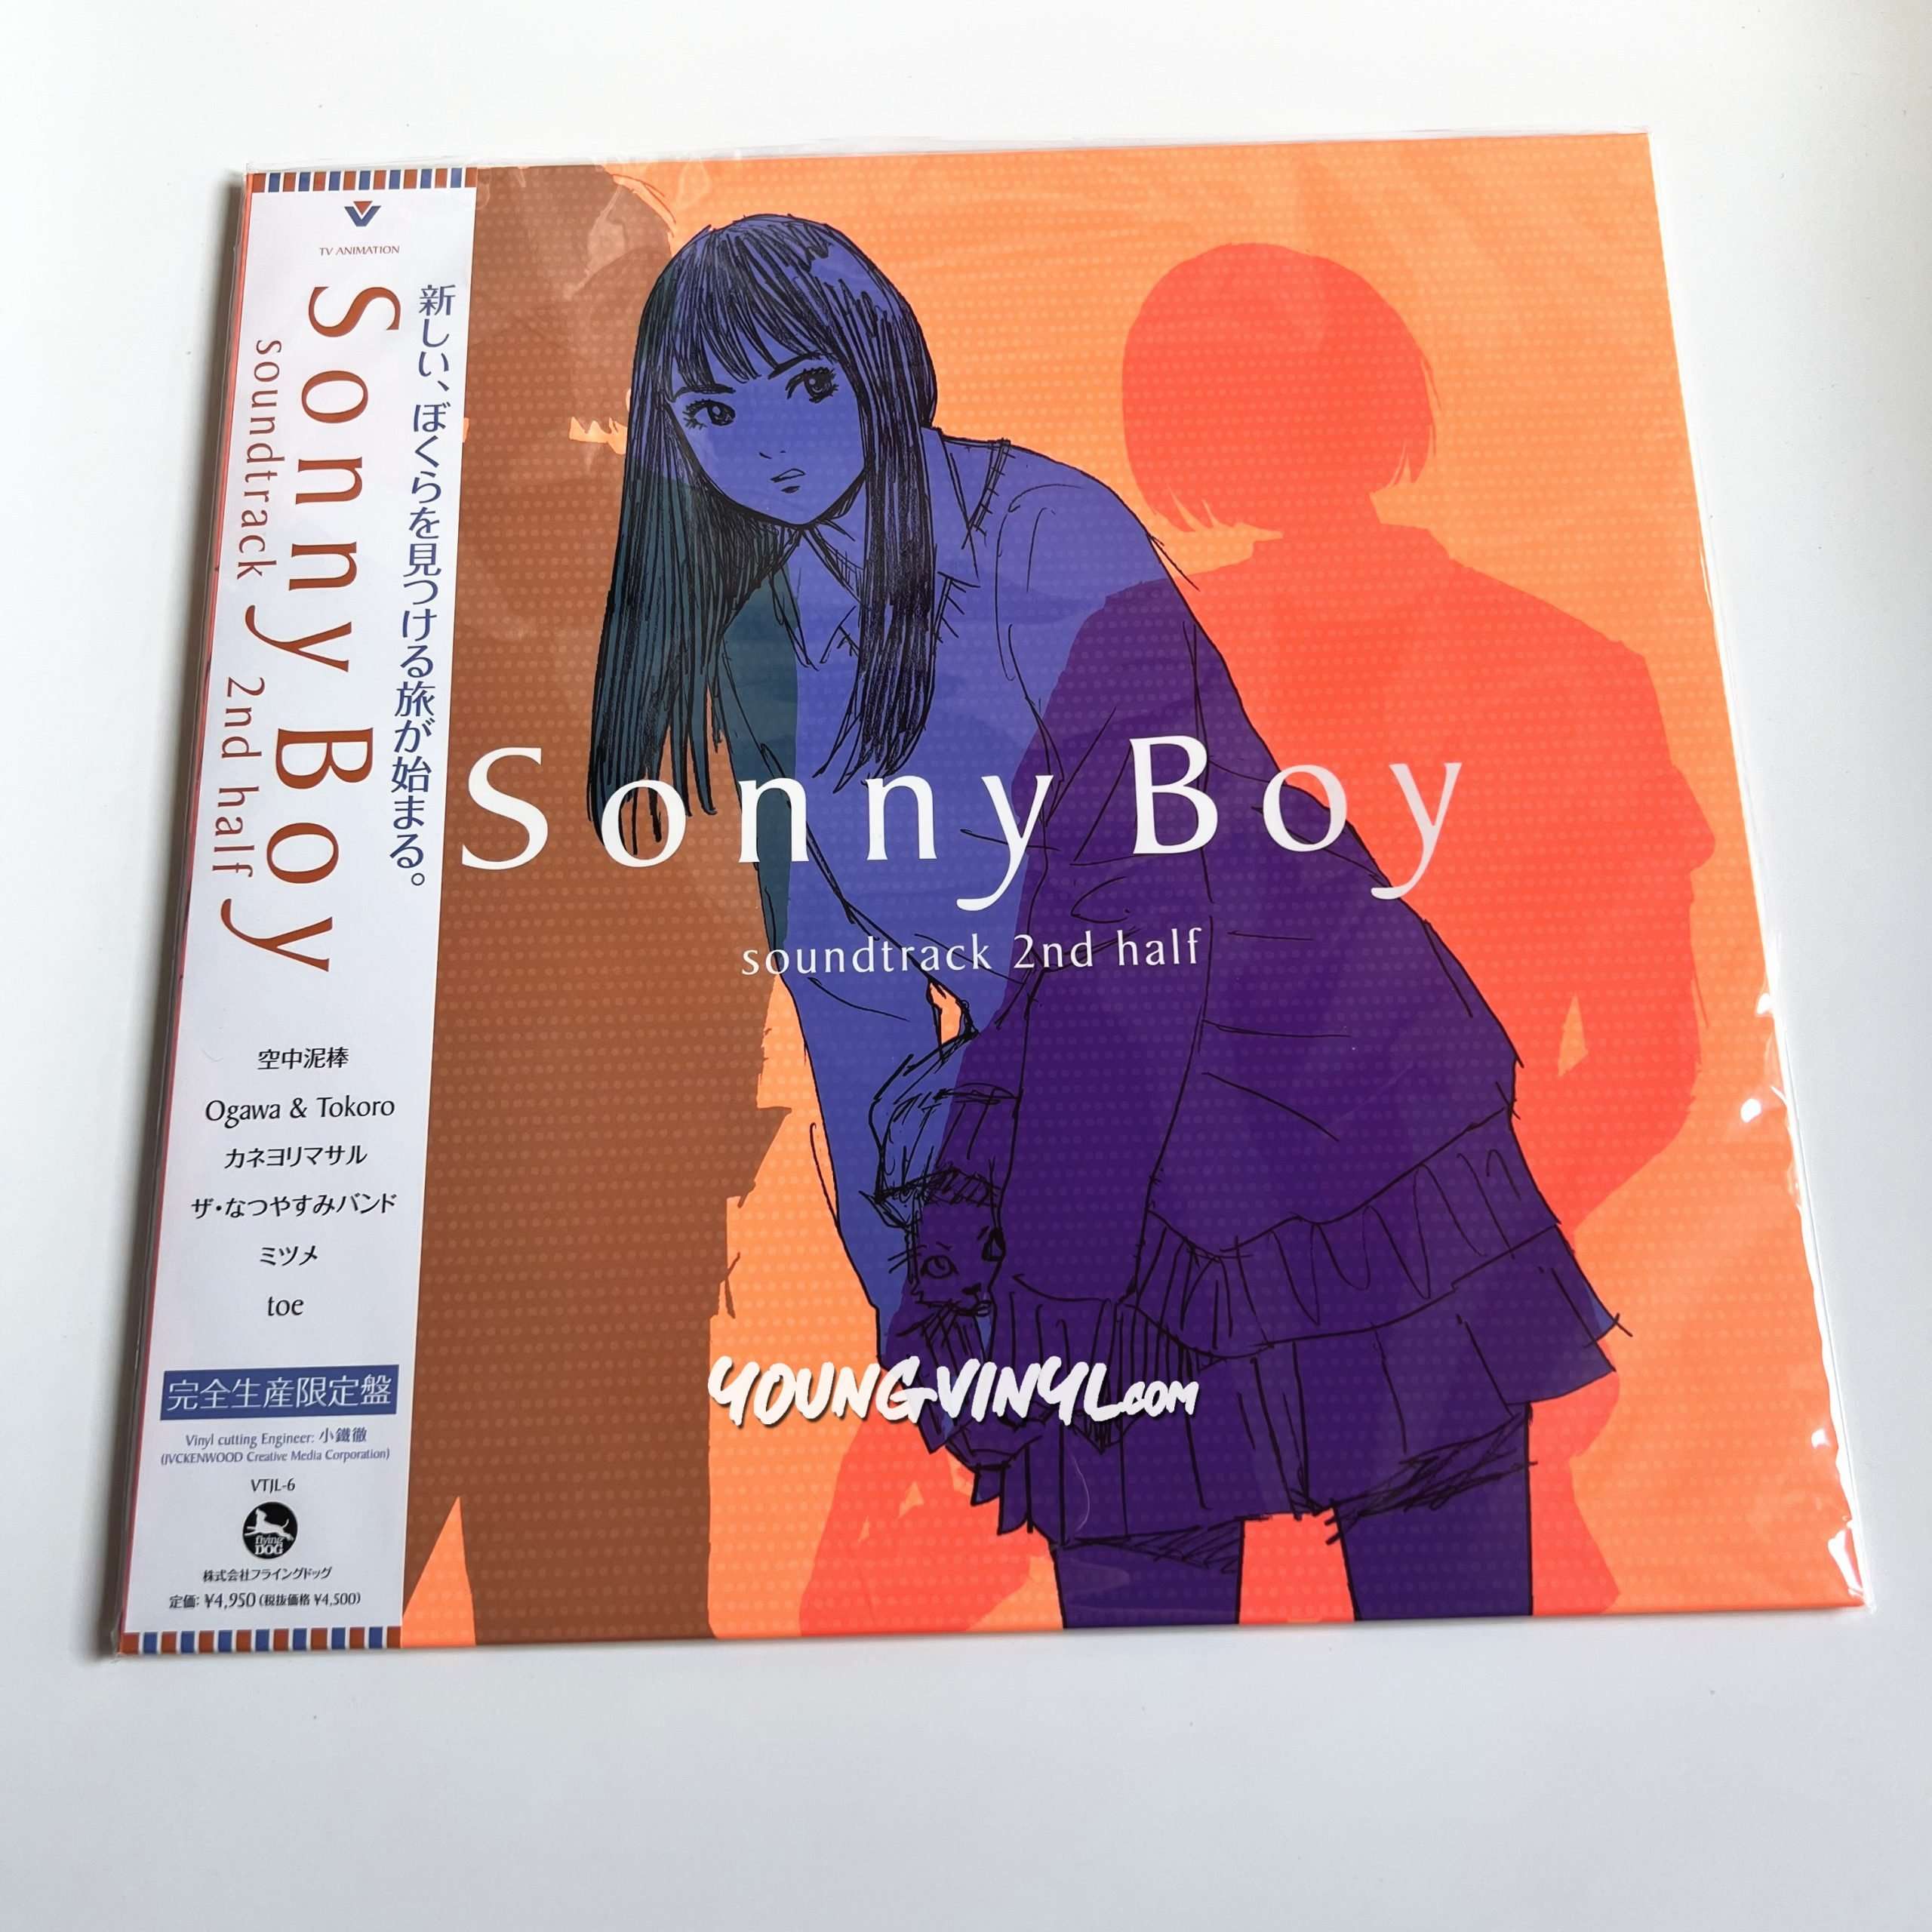 Sonny Boy soundtrack 2nd half Vinyl LP Limited mid air thief toe